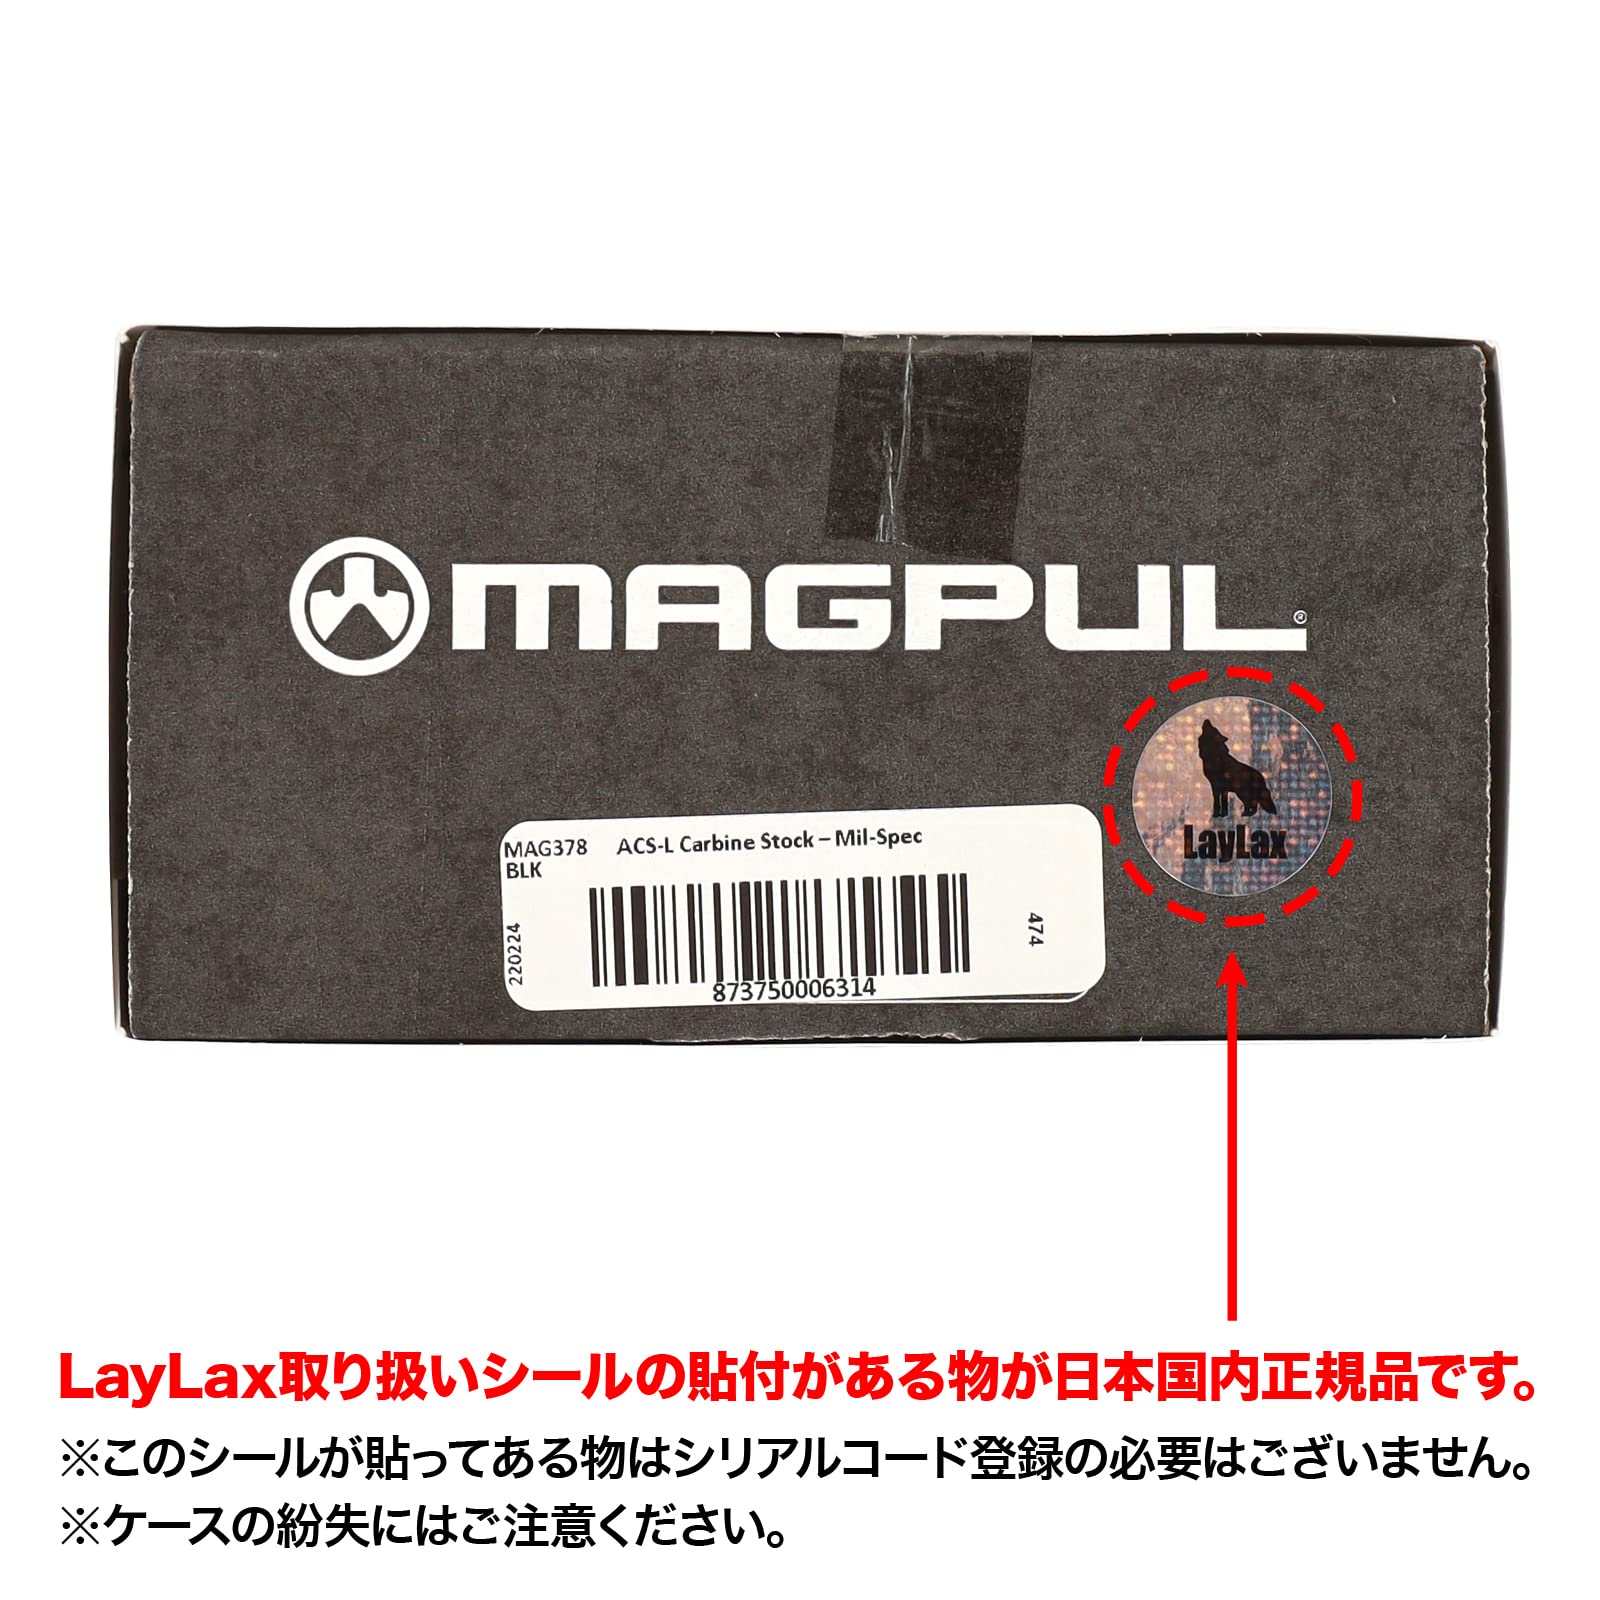 Magpul MAG540 Quick Detach QD Sling Swivel for Rifles, Black